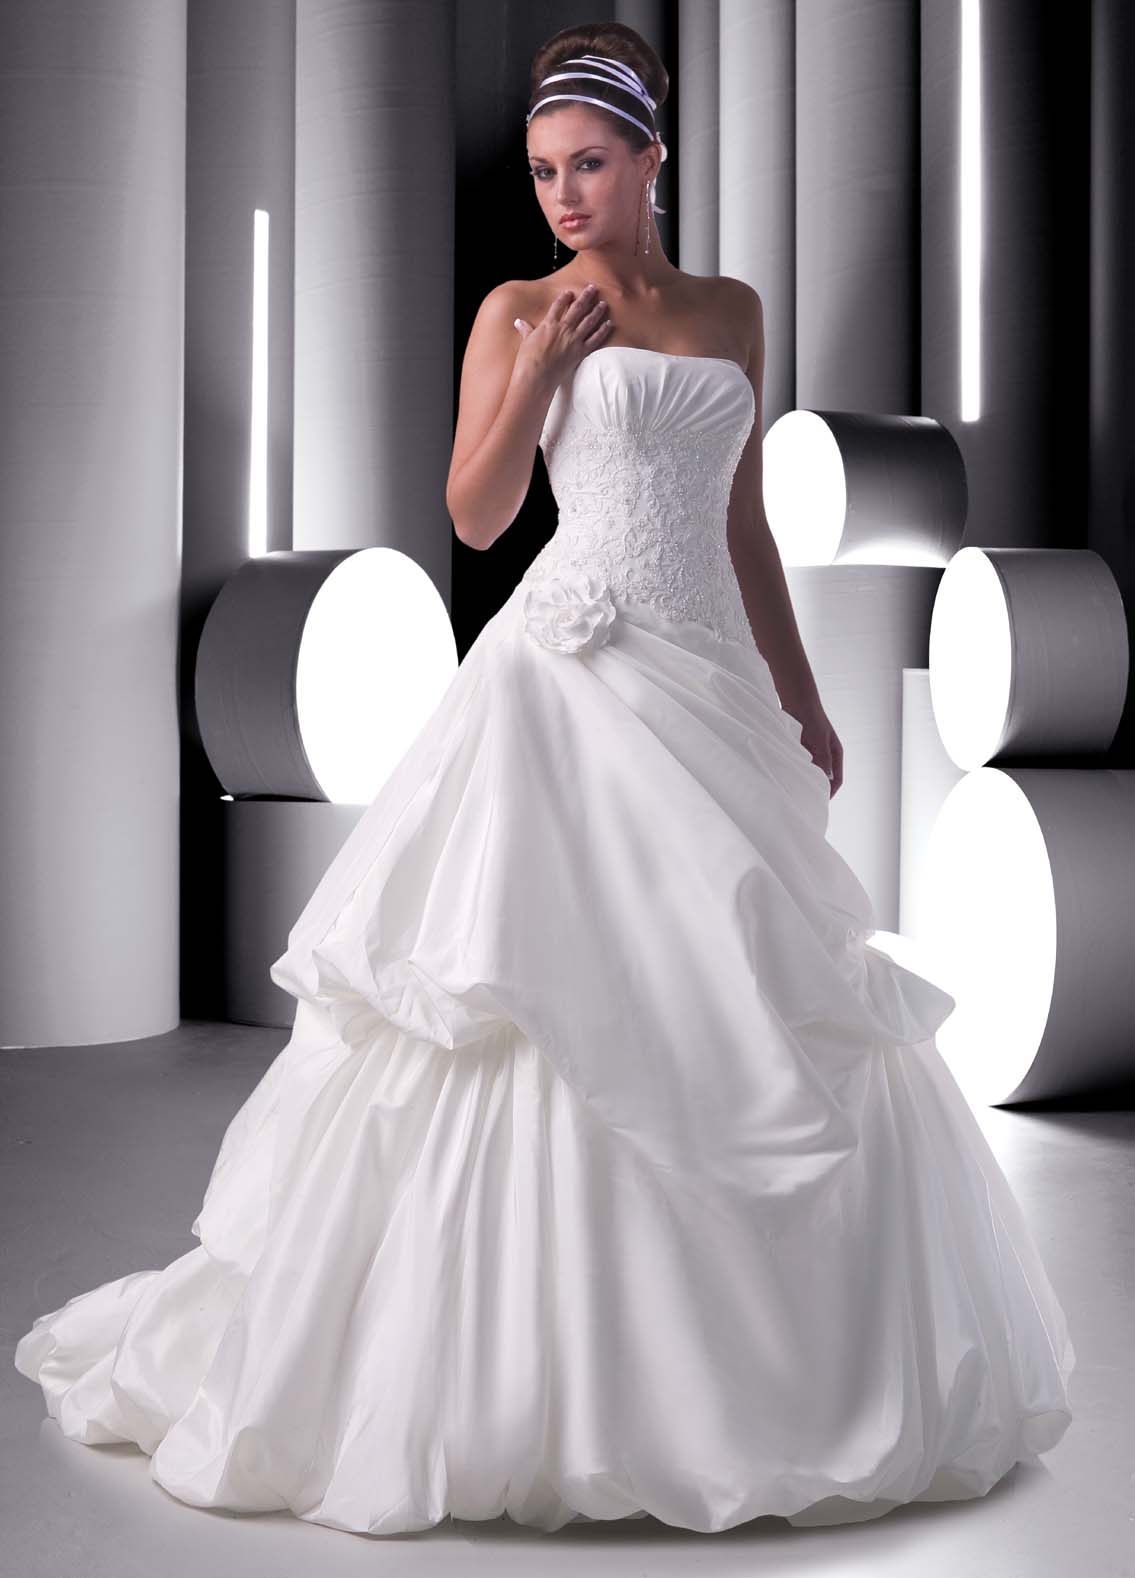 Bridal Dresses - Wedding dress styles.